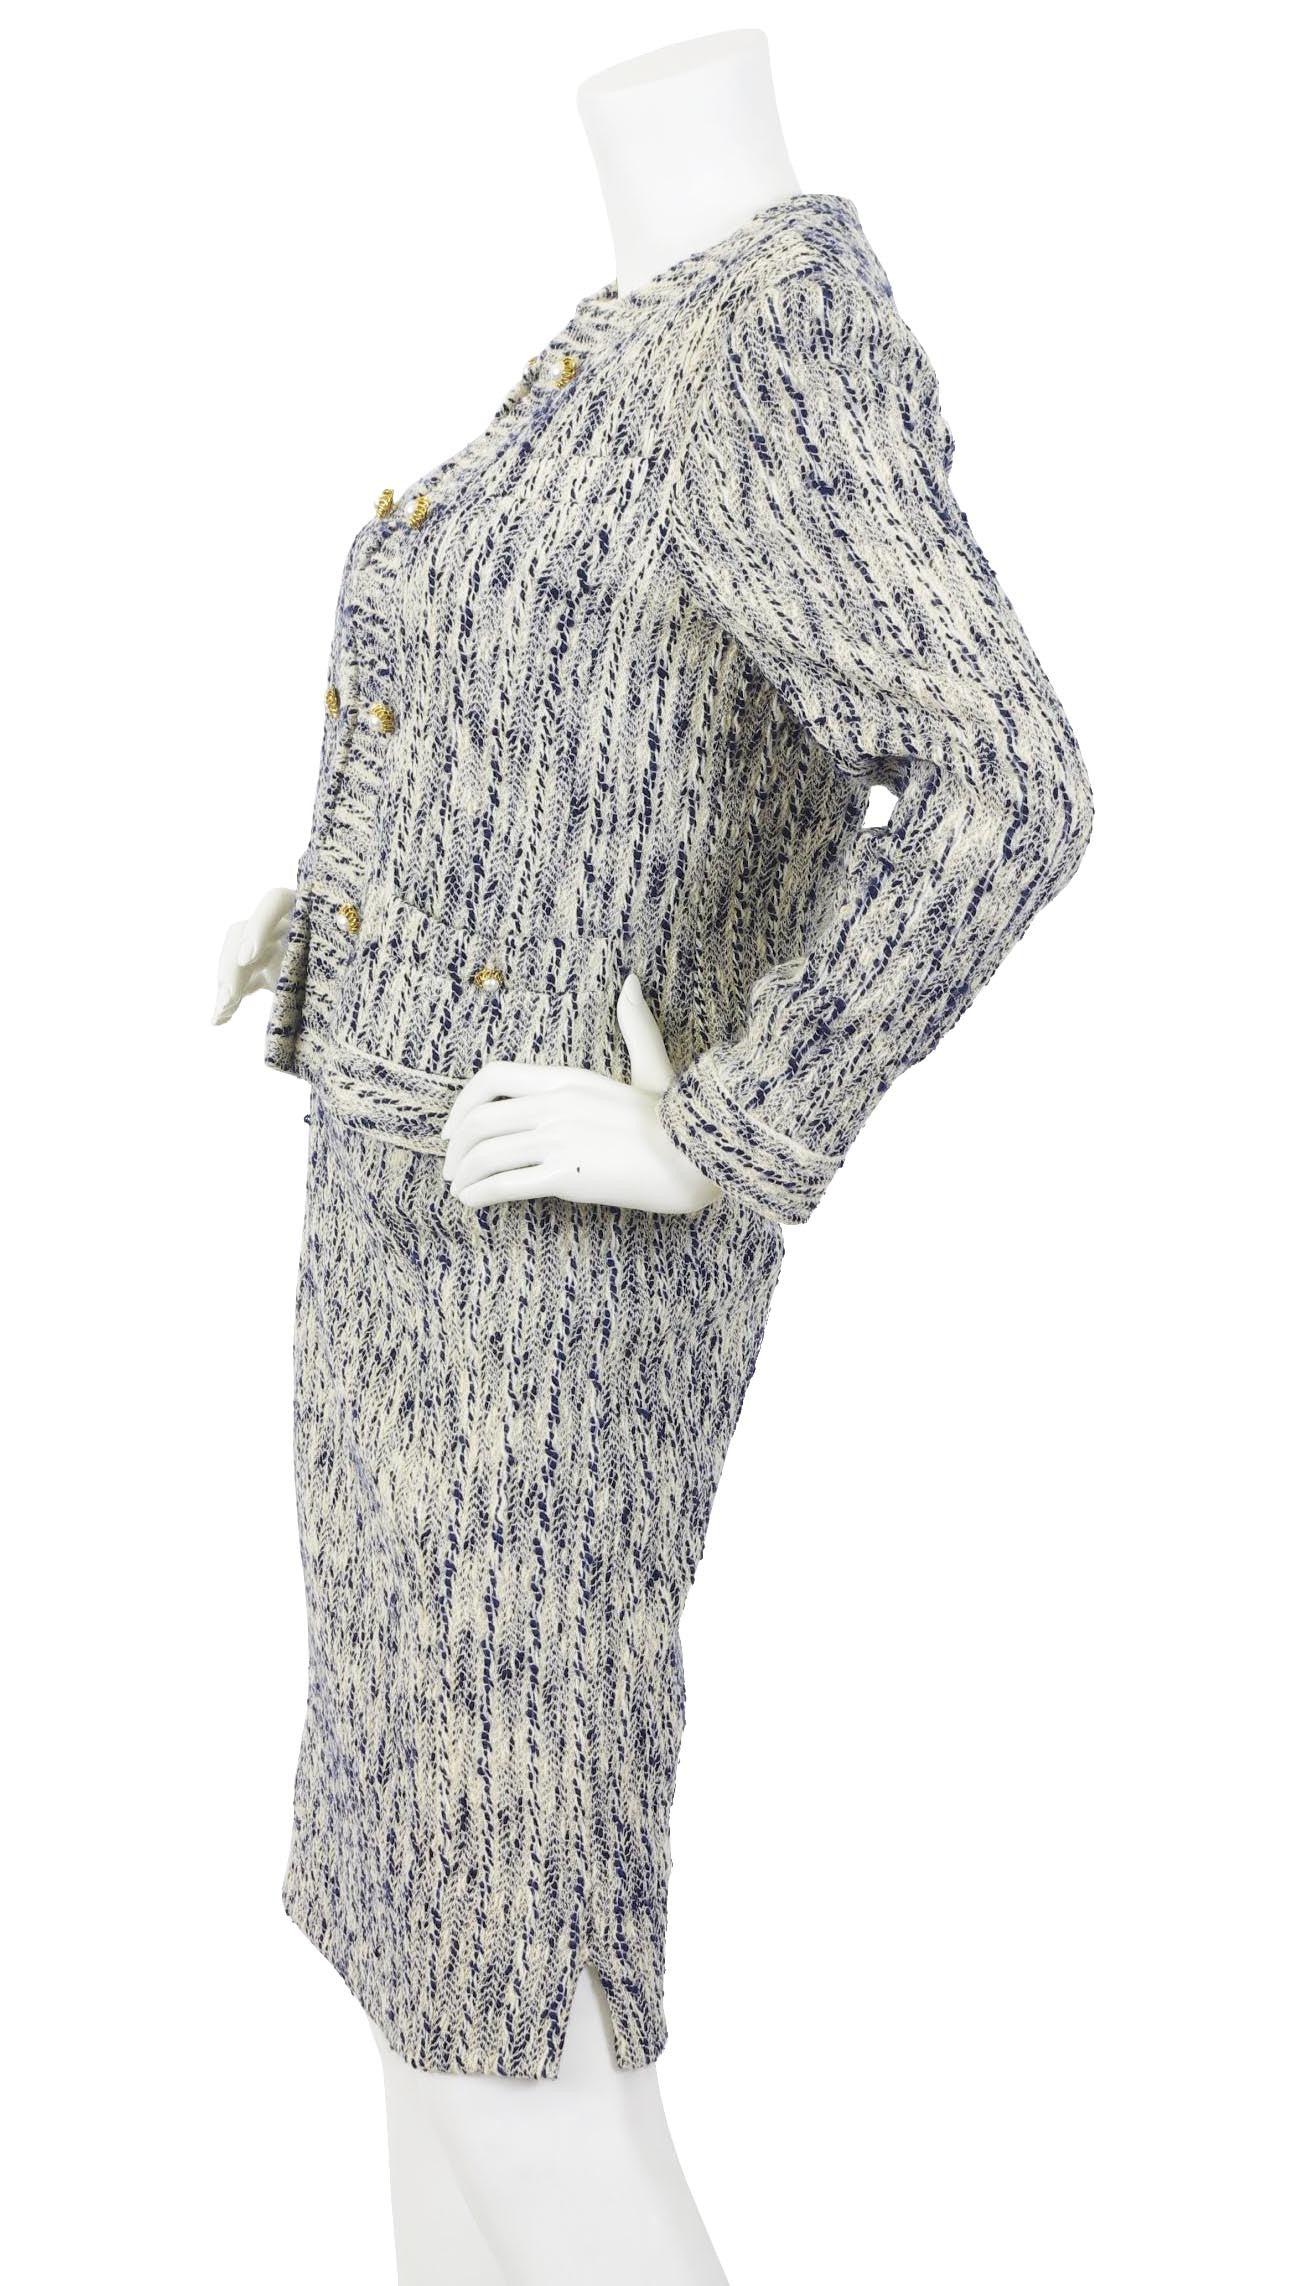 Louis Feraud, Jackets & Coats, Vintage Louis Feraud Navy White Blazer  Skirt Suit